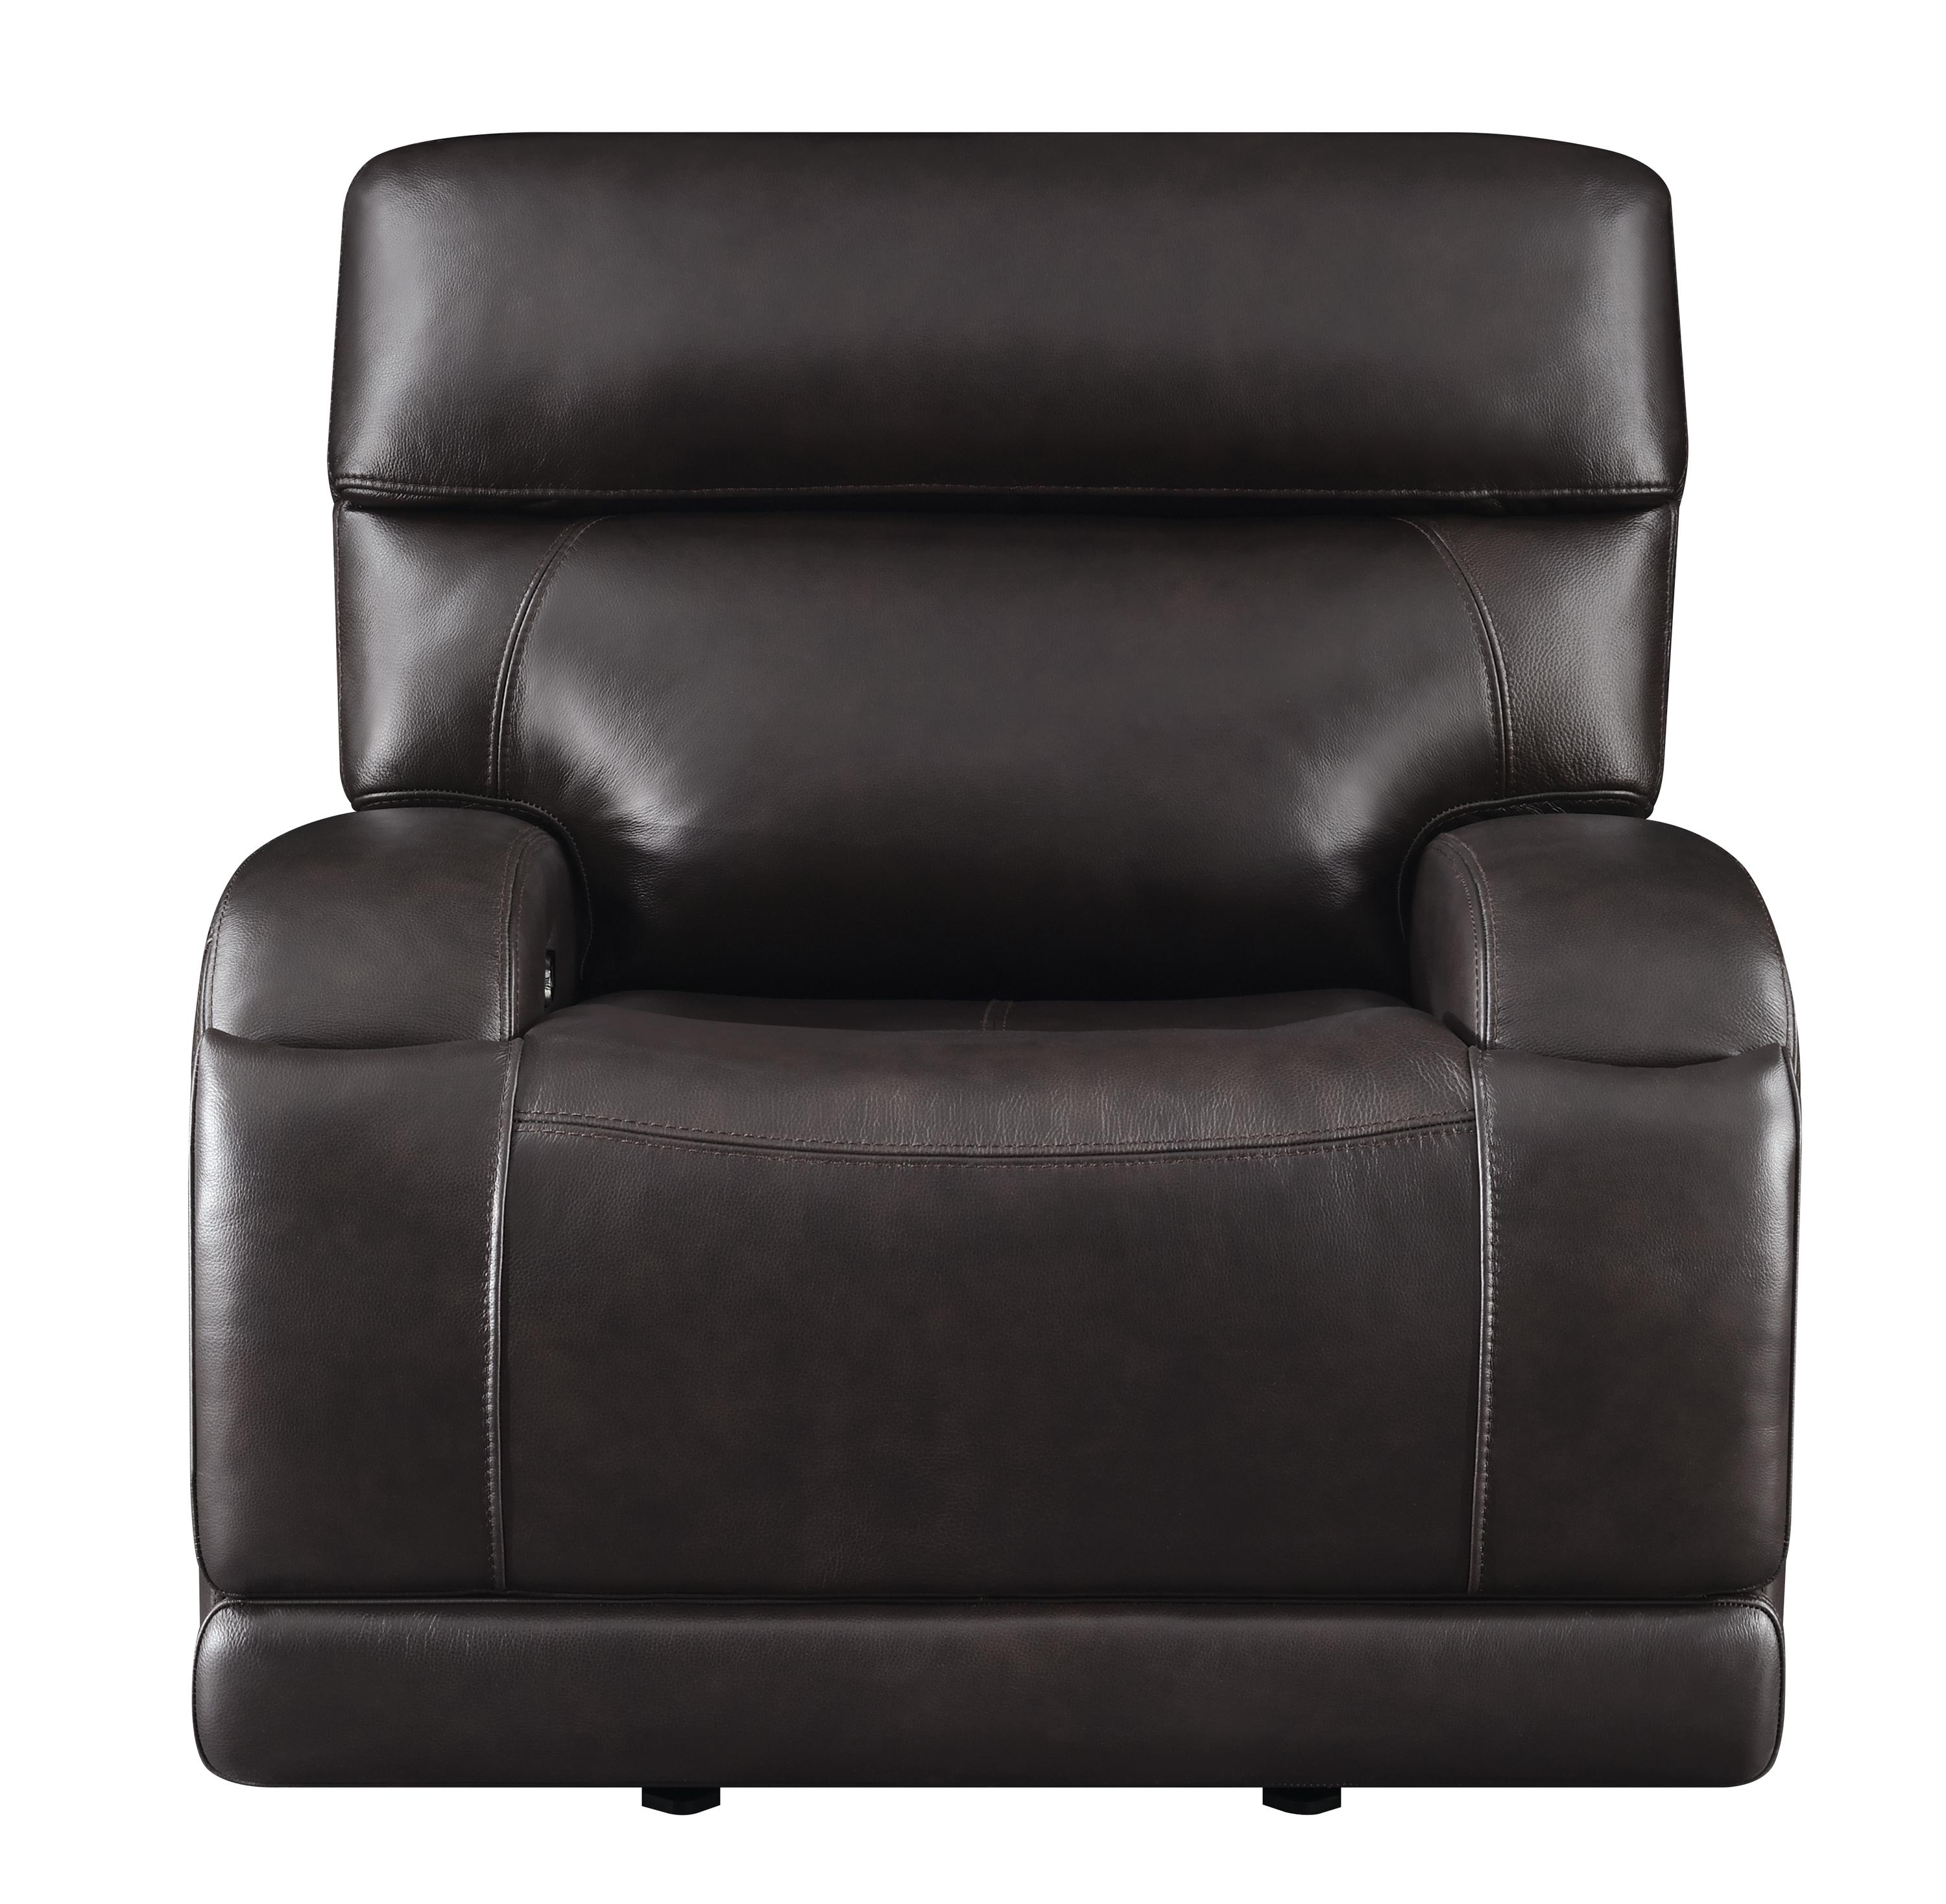 Modern Power recliner 610483P Longport 610483P in Dark Brown Top grain leather